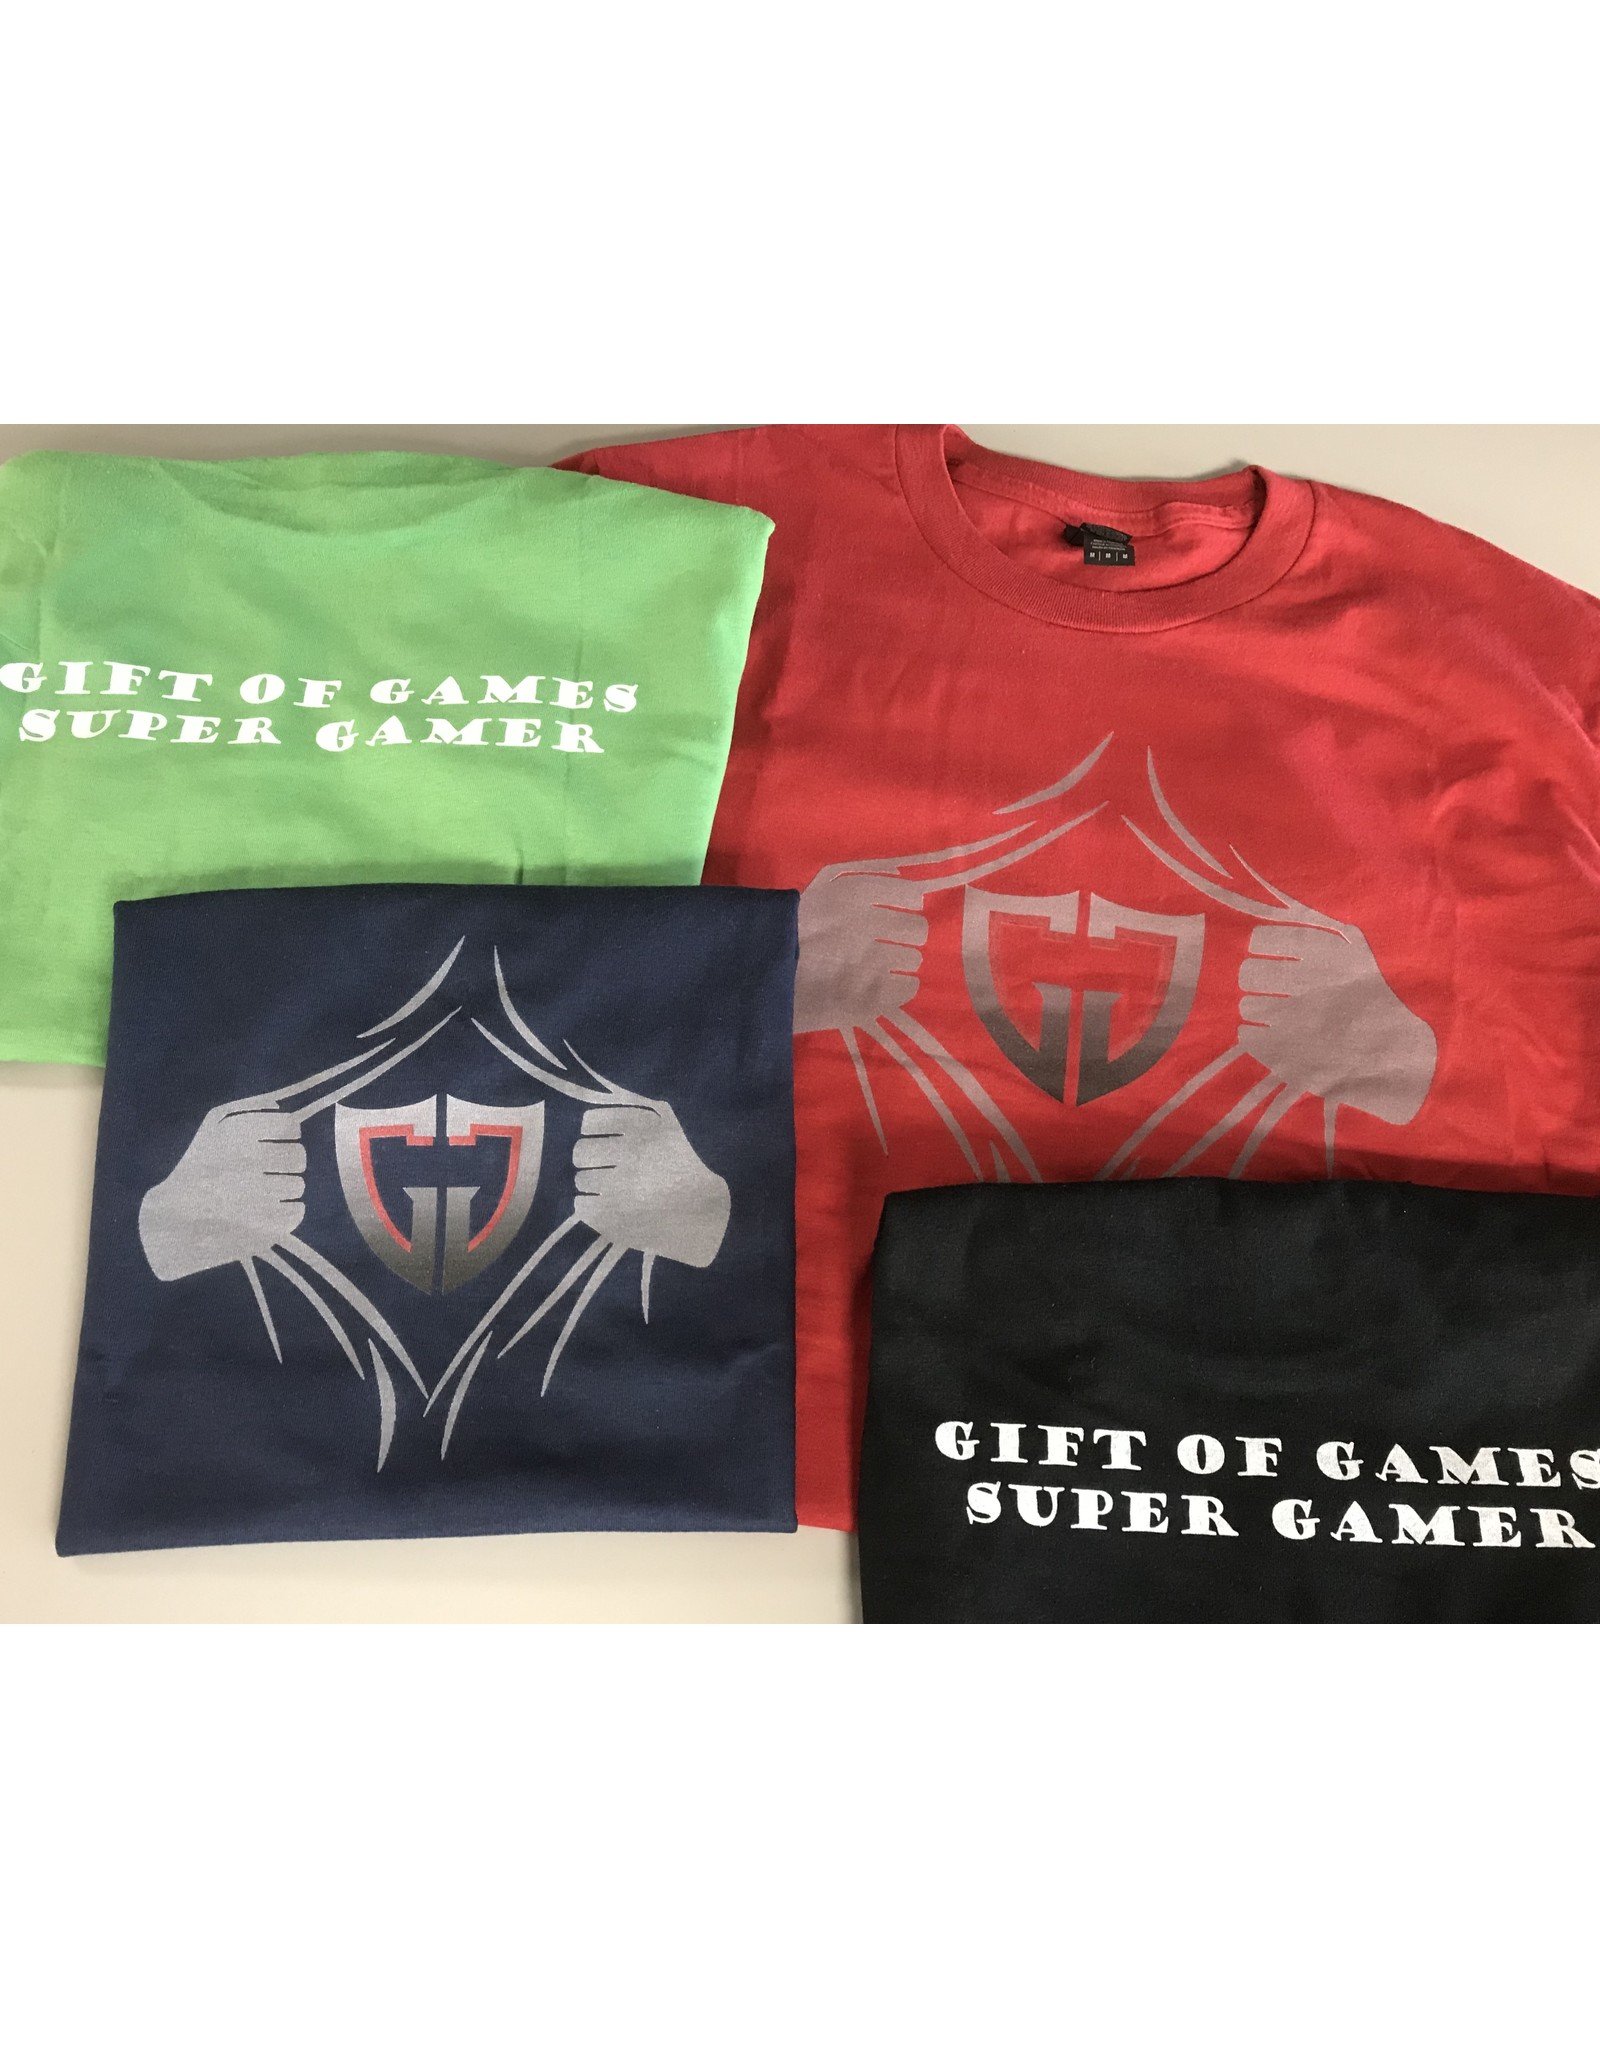 Gift of Games Gift of Games Super Gamer Shirt